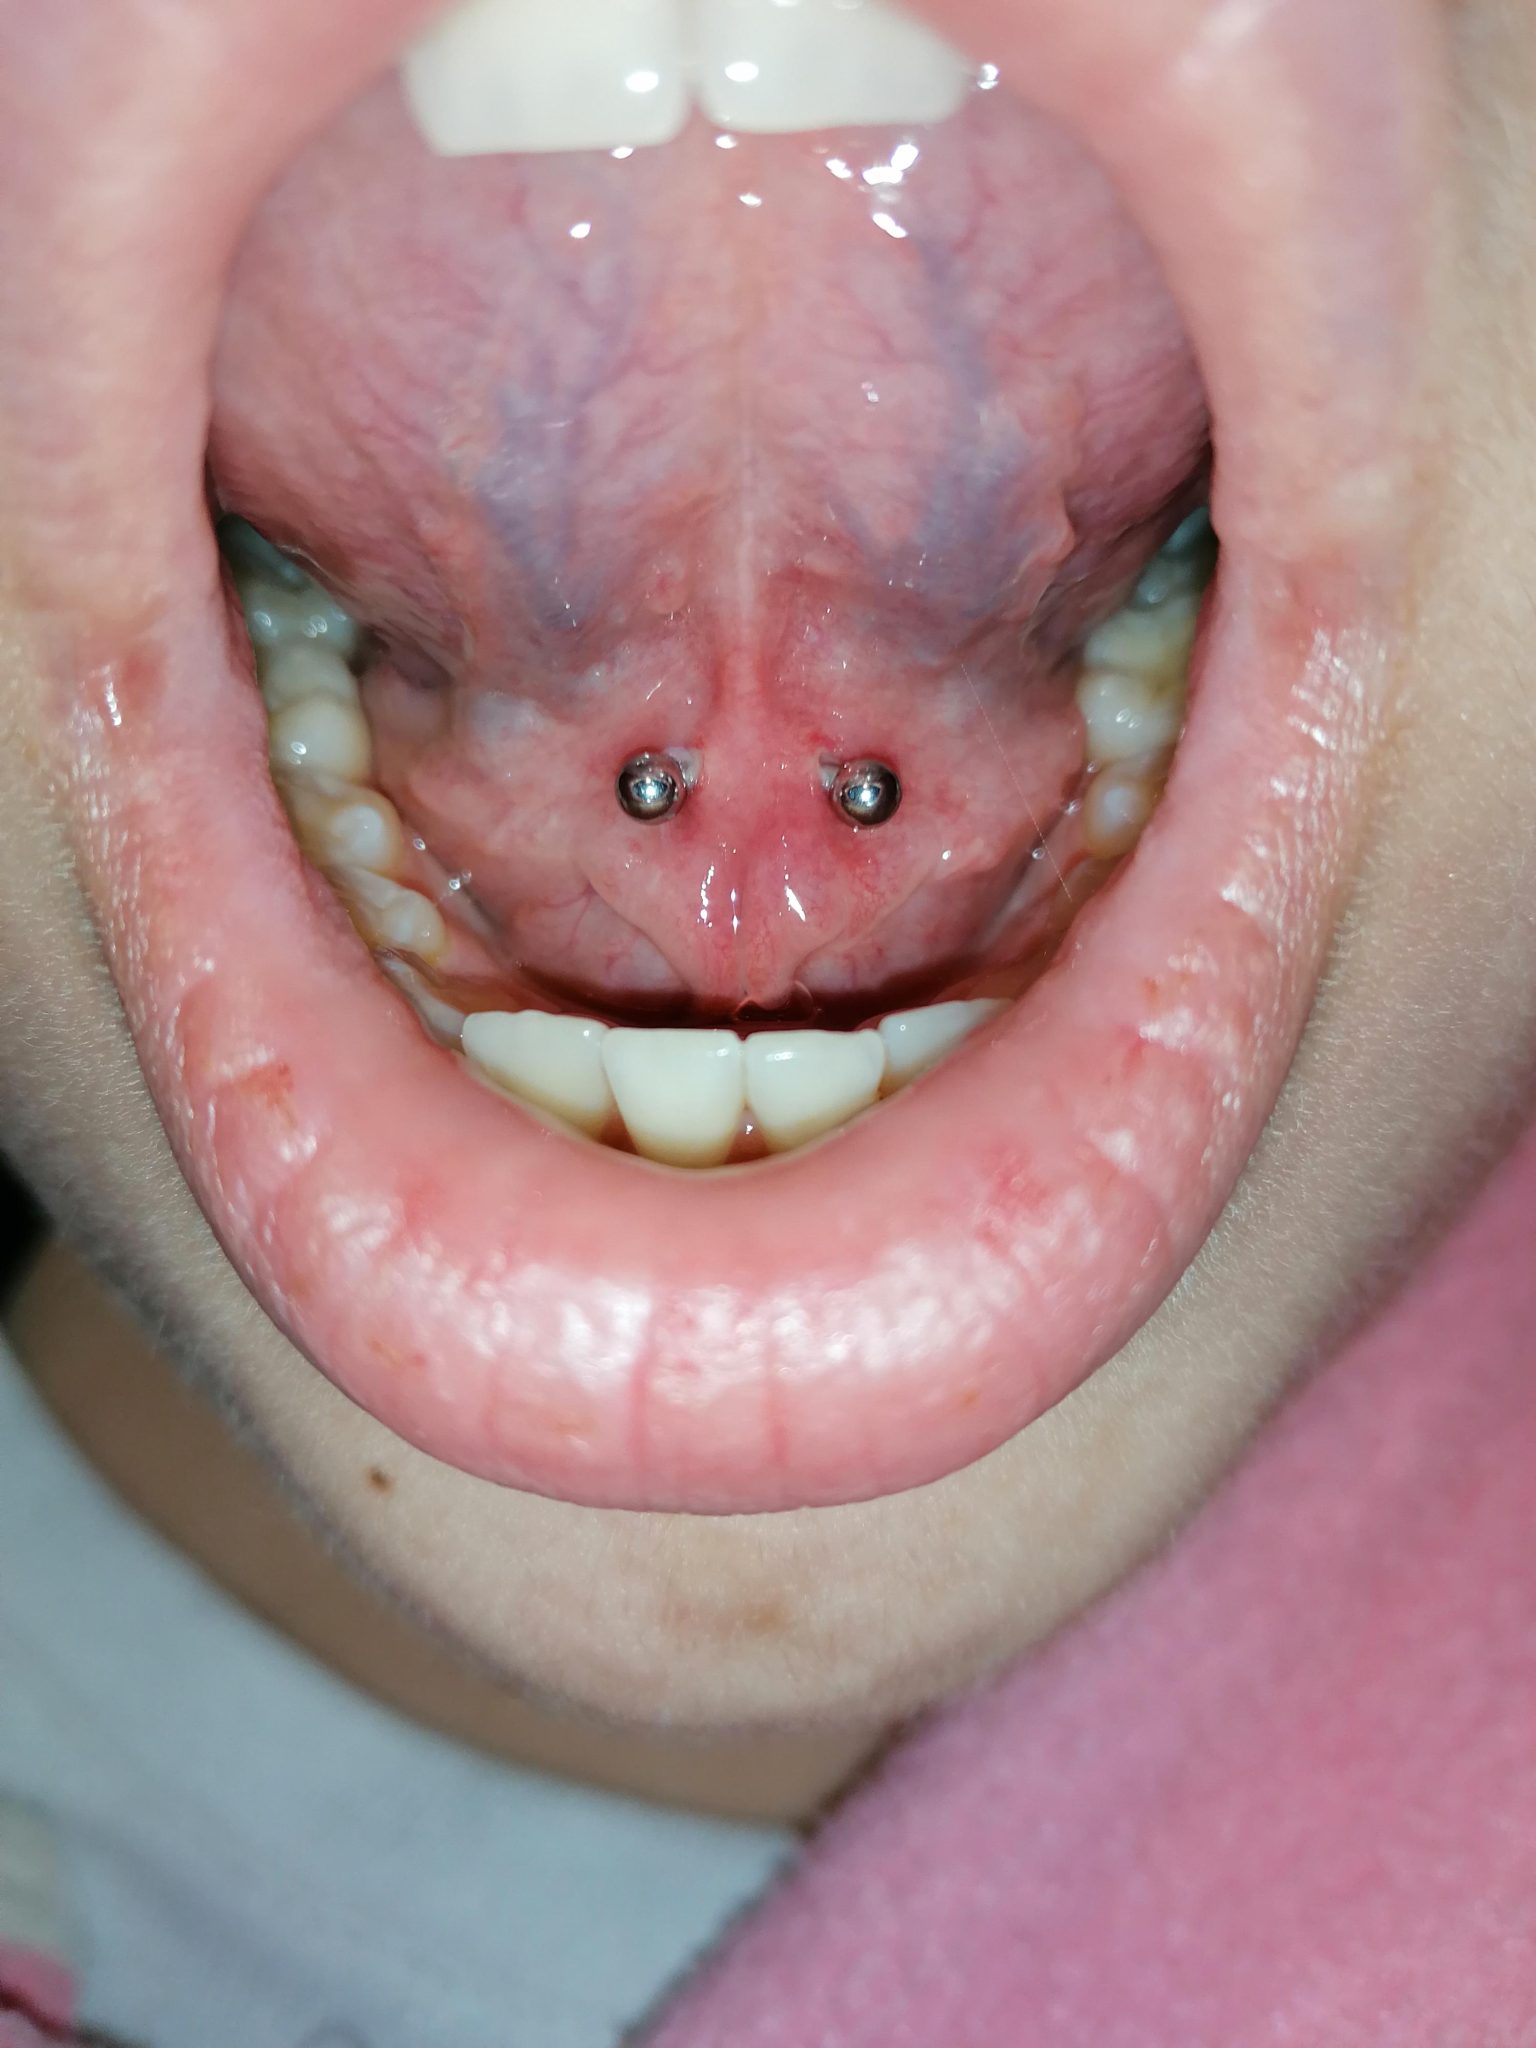 Tongue Web (Frenulum) Piercing